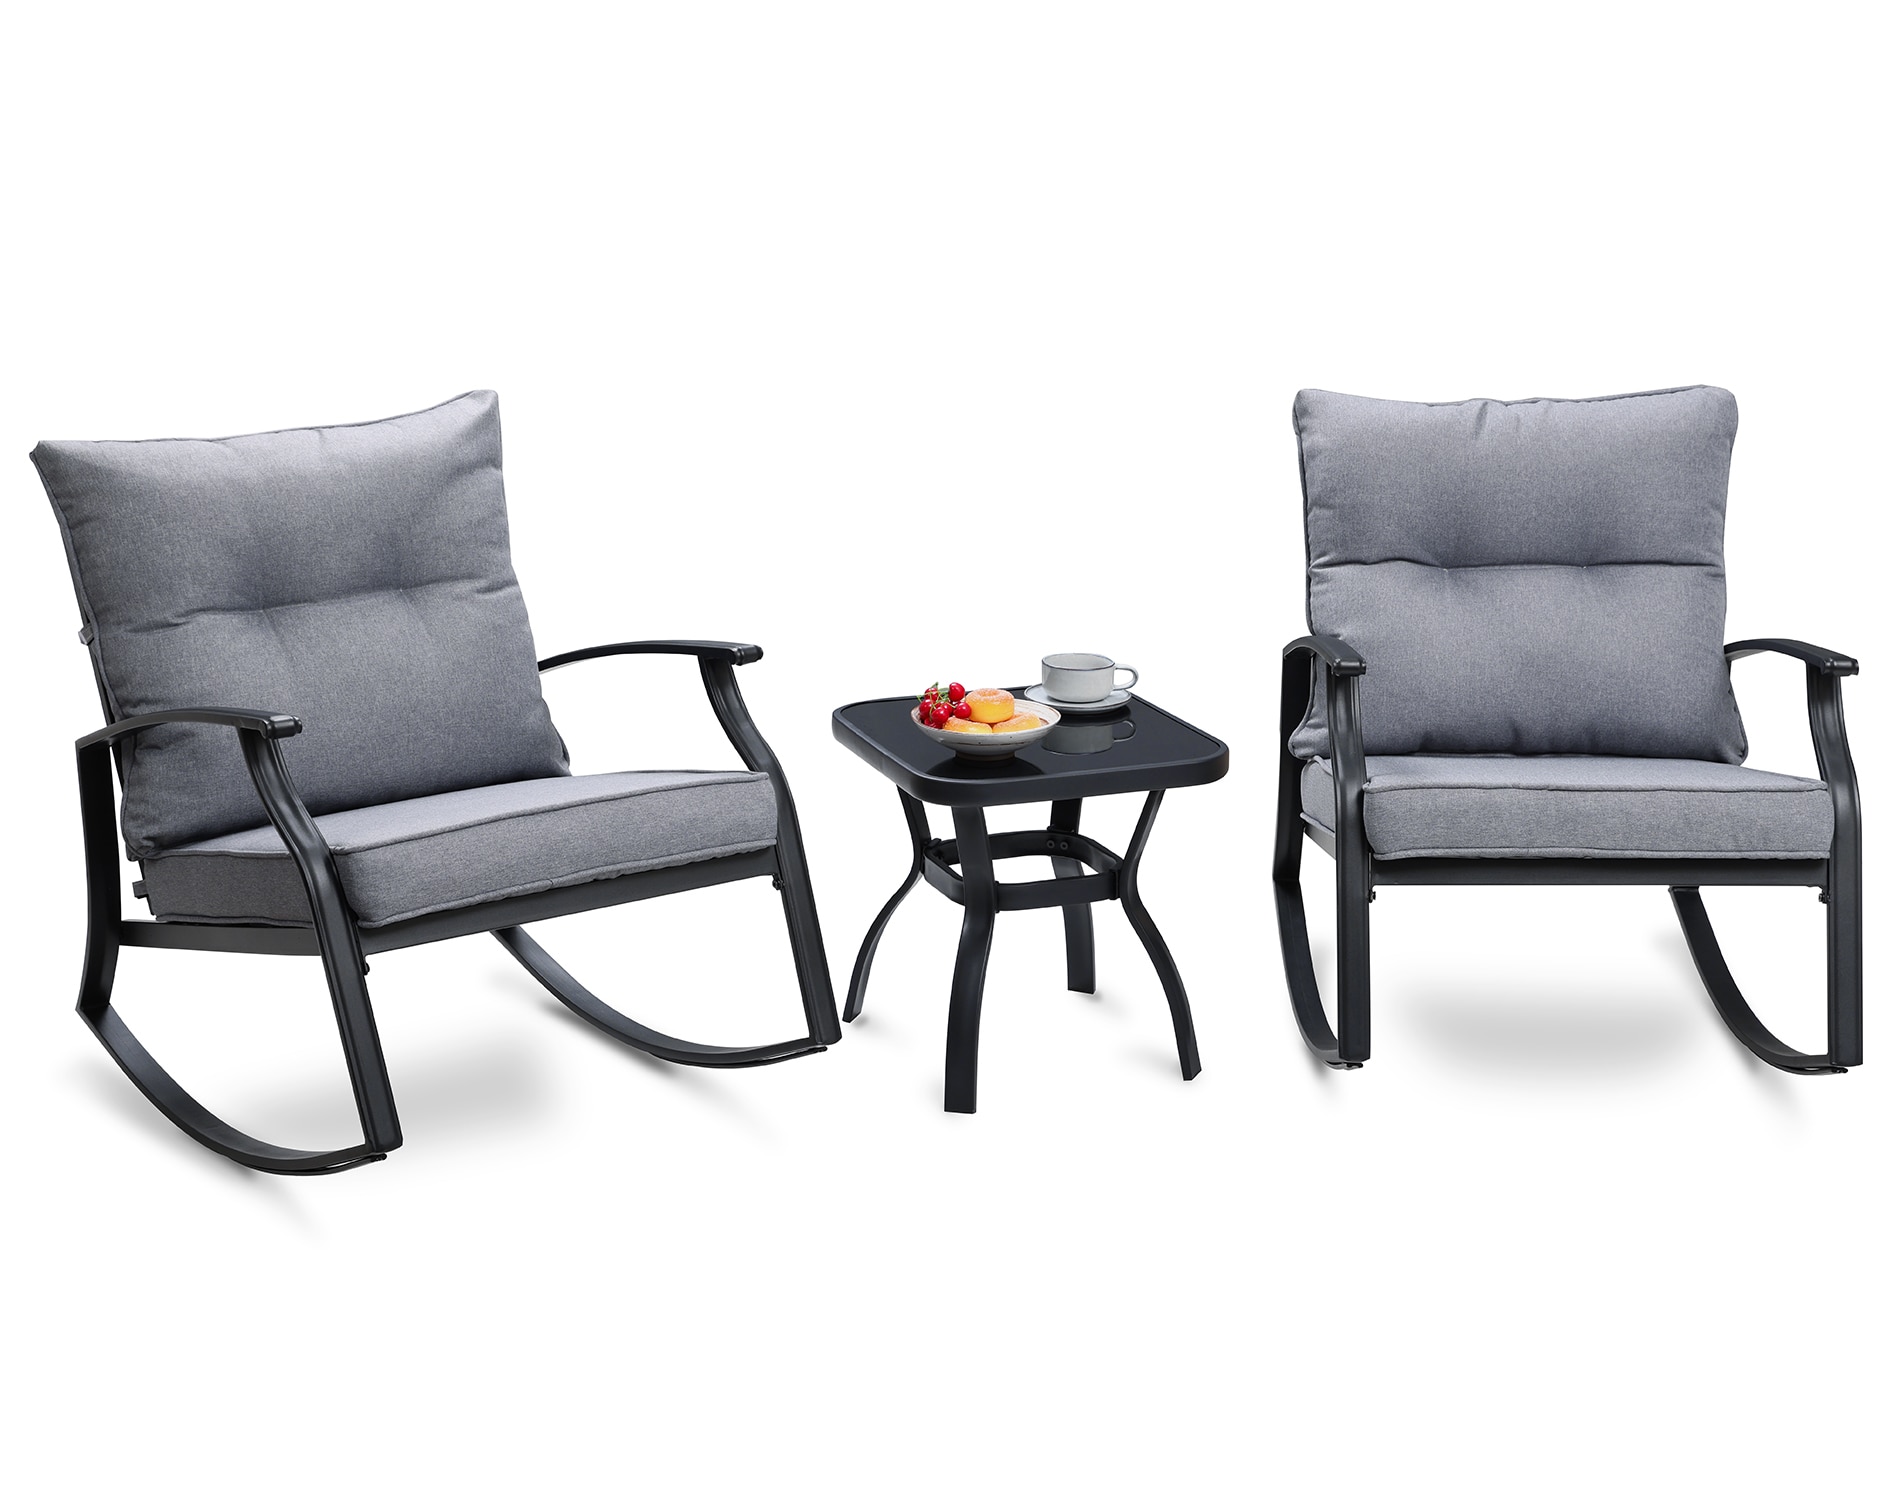 3 PCS Patio Rattan Wicker Furniture Set Comfortable Rocking Chair Coffee Table 